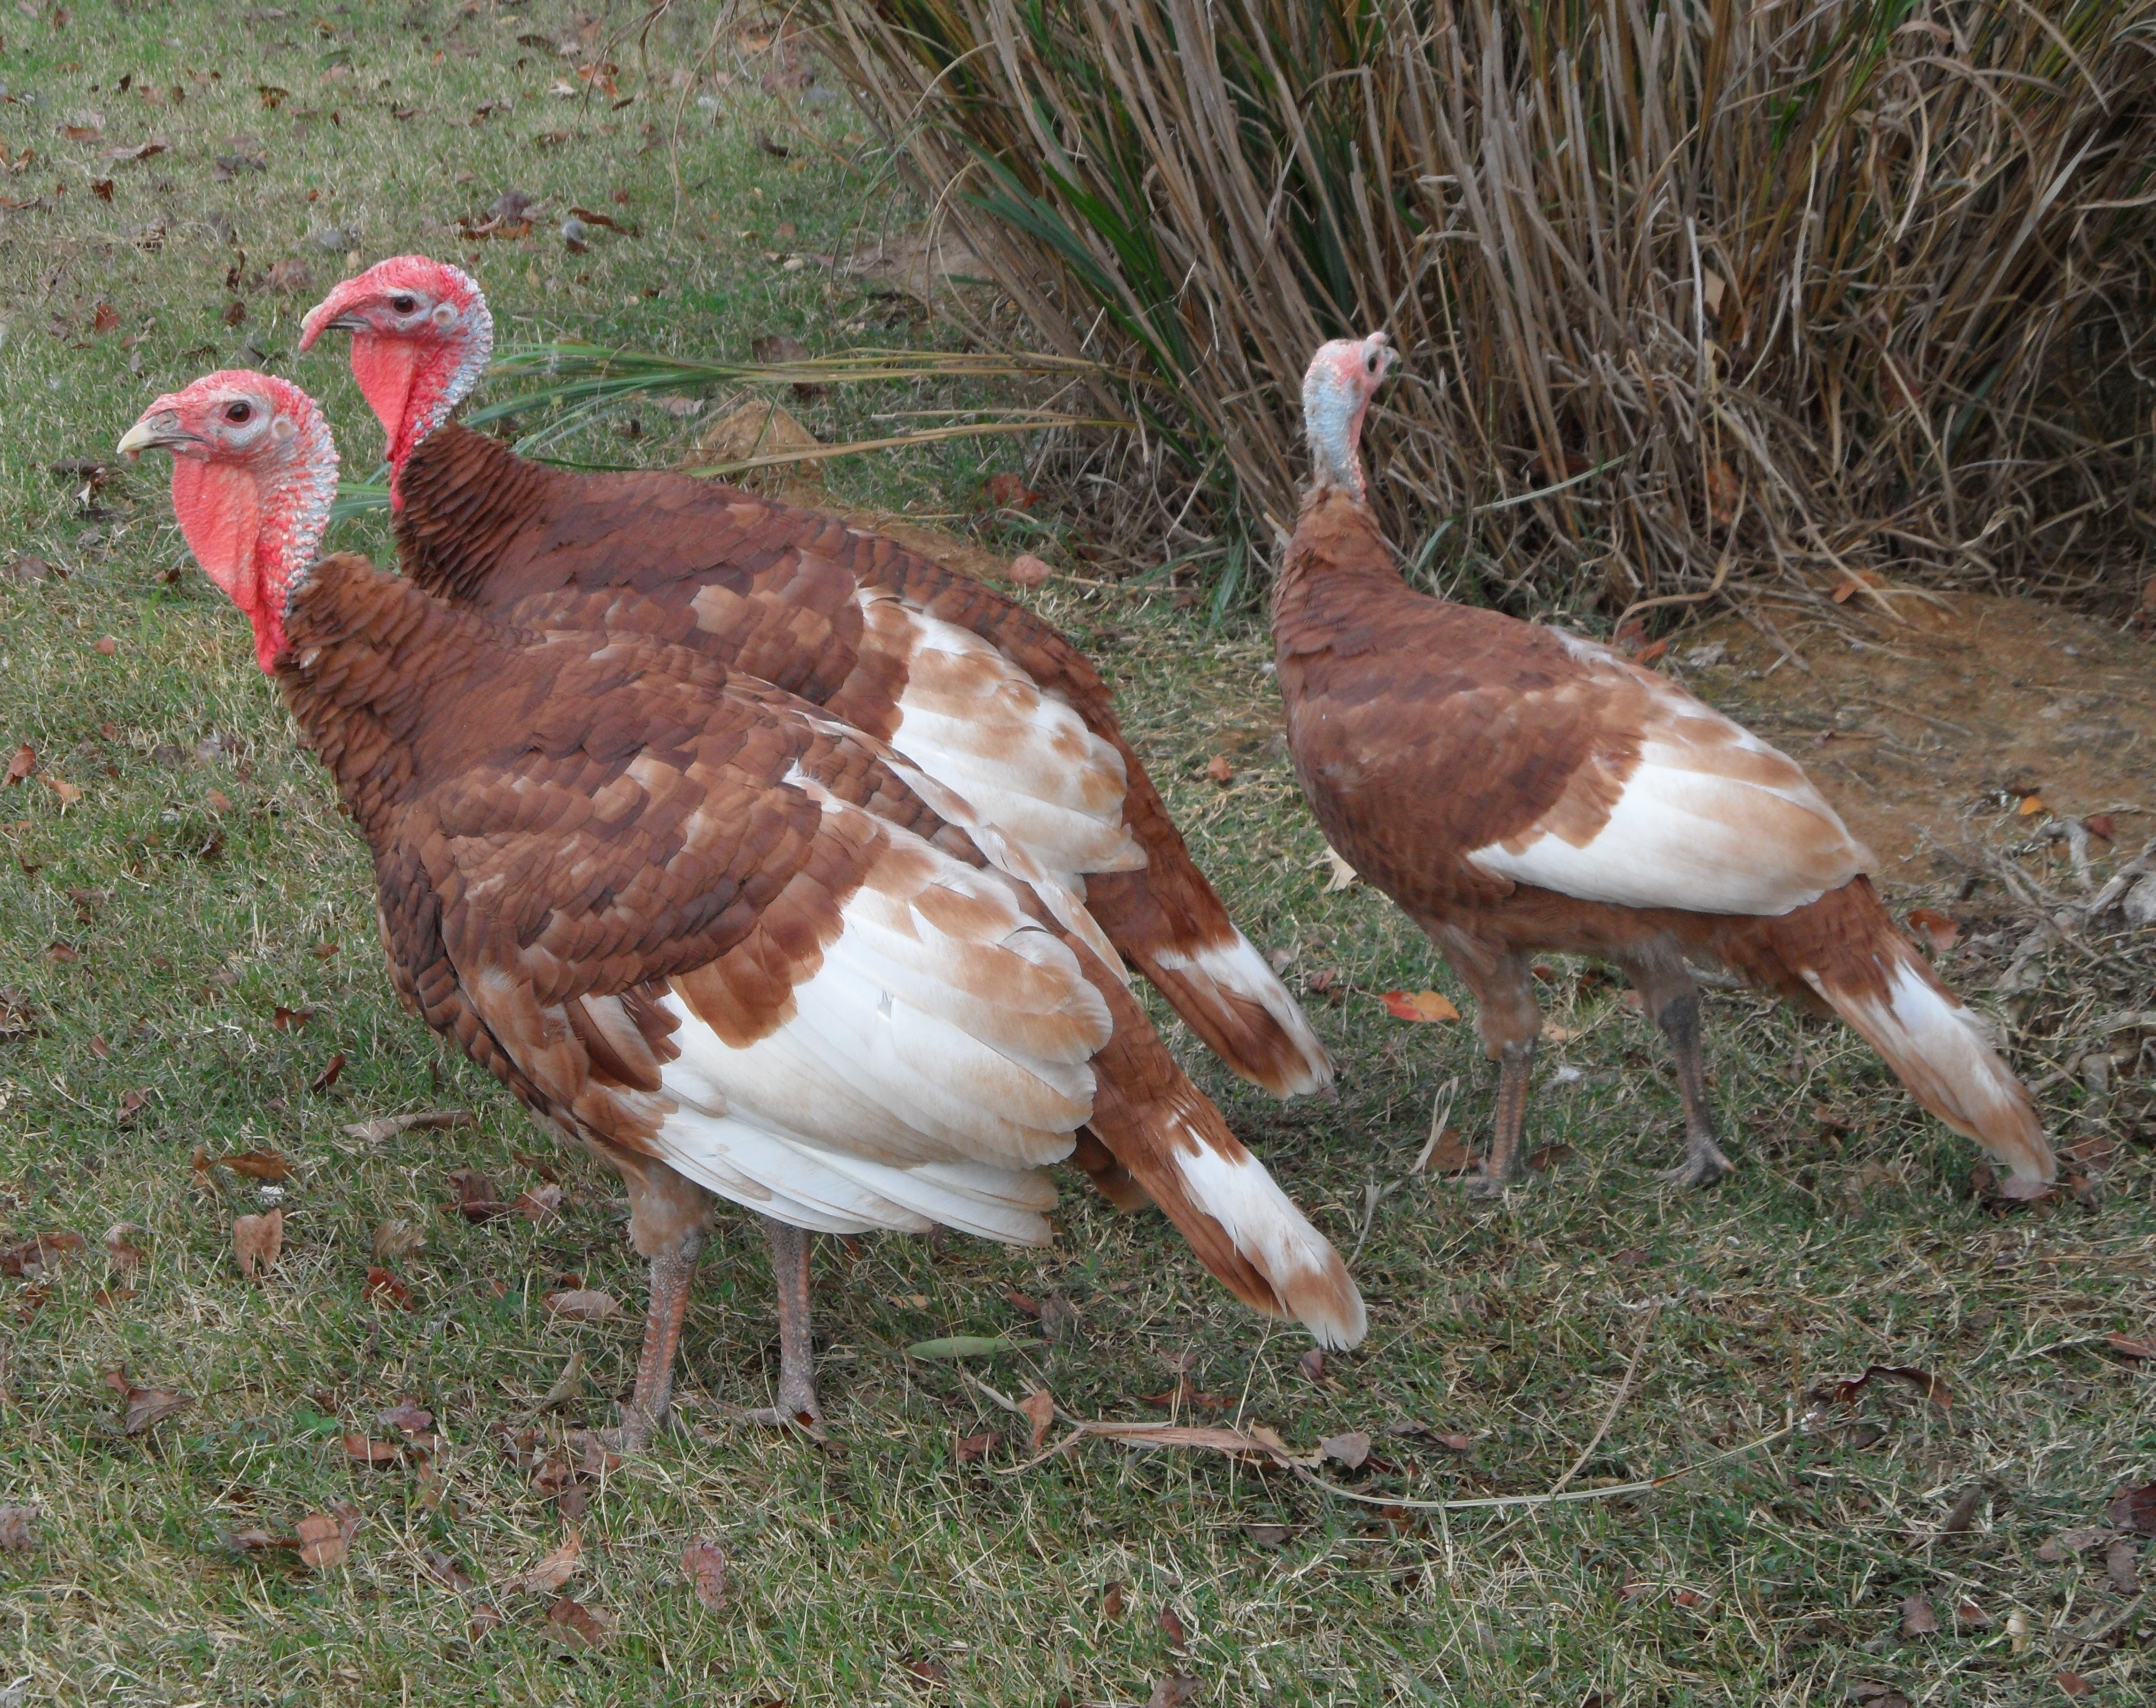 Red Turkeys | Pics4Learning